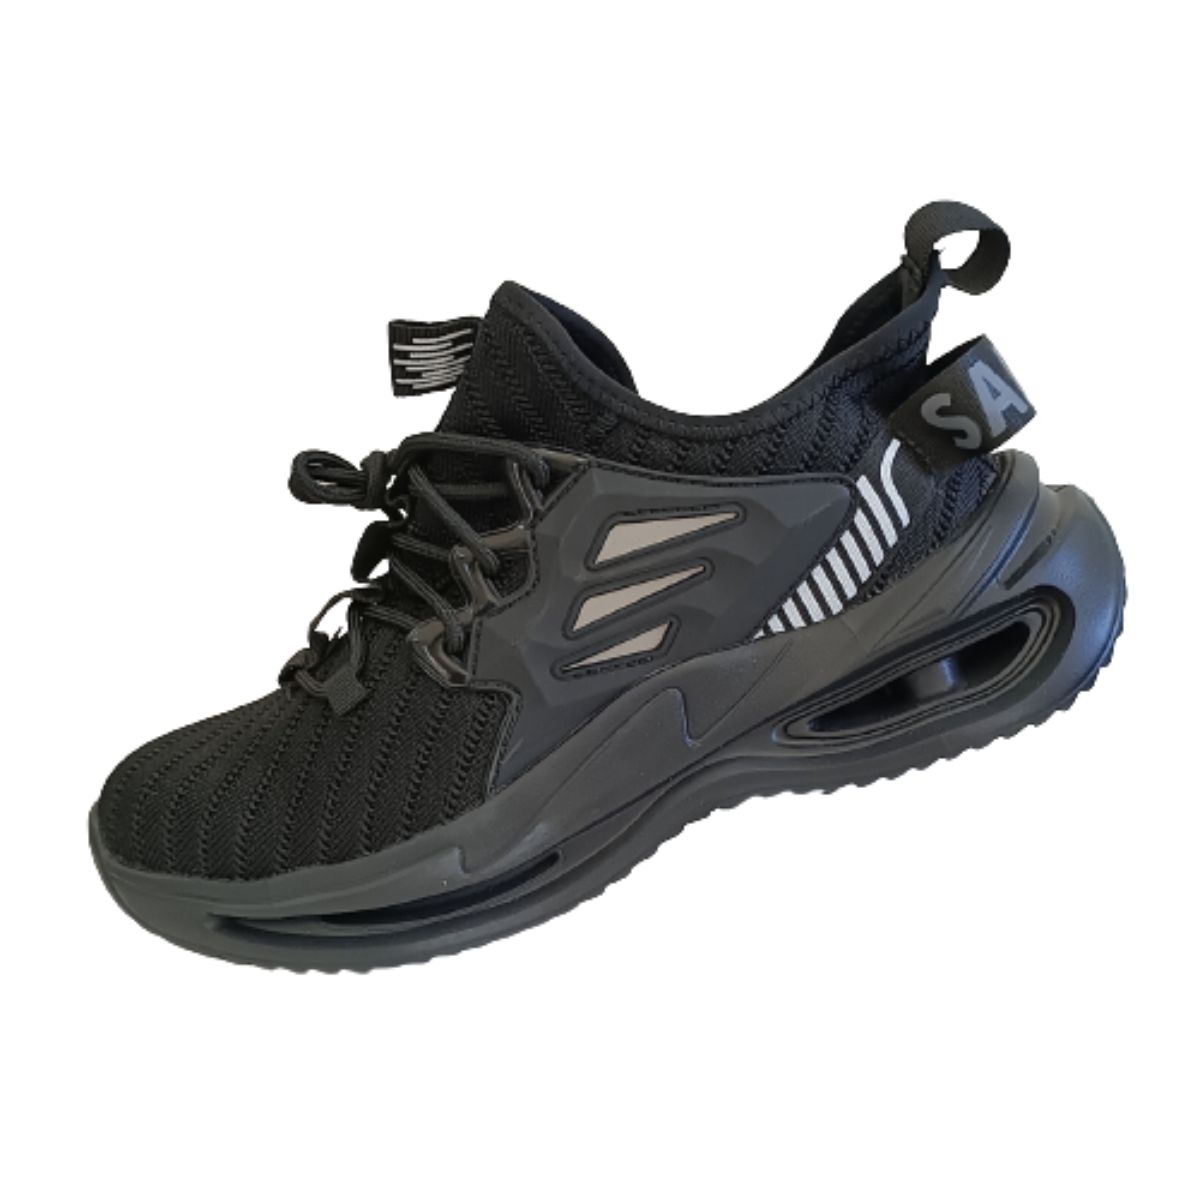 Safety Work Shoe With Steel Toe (Sneaker) - SWS01 - Anti-pierce & Water Repellent - Black